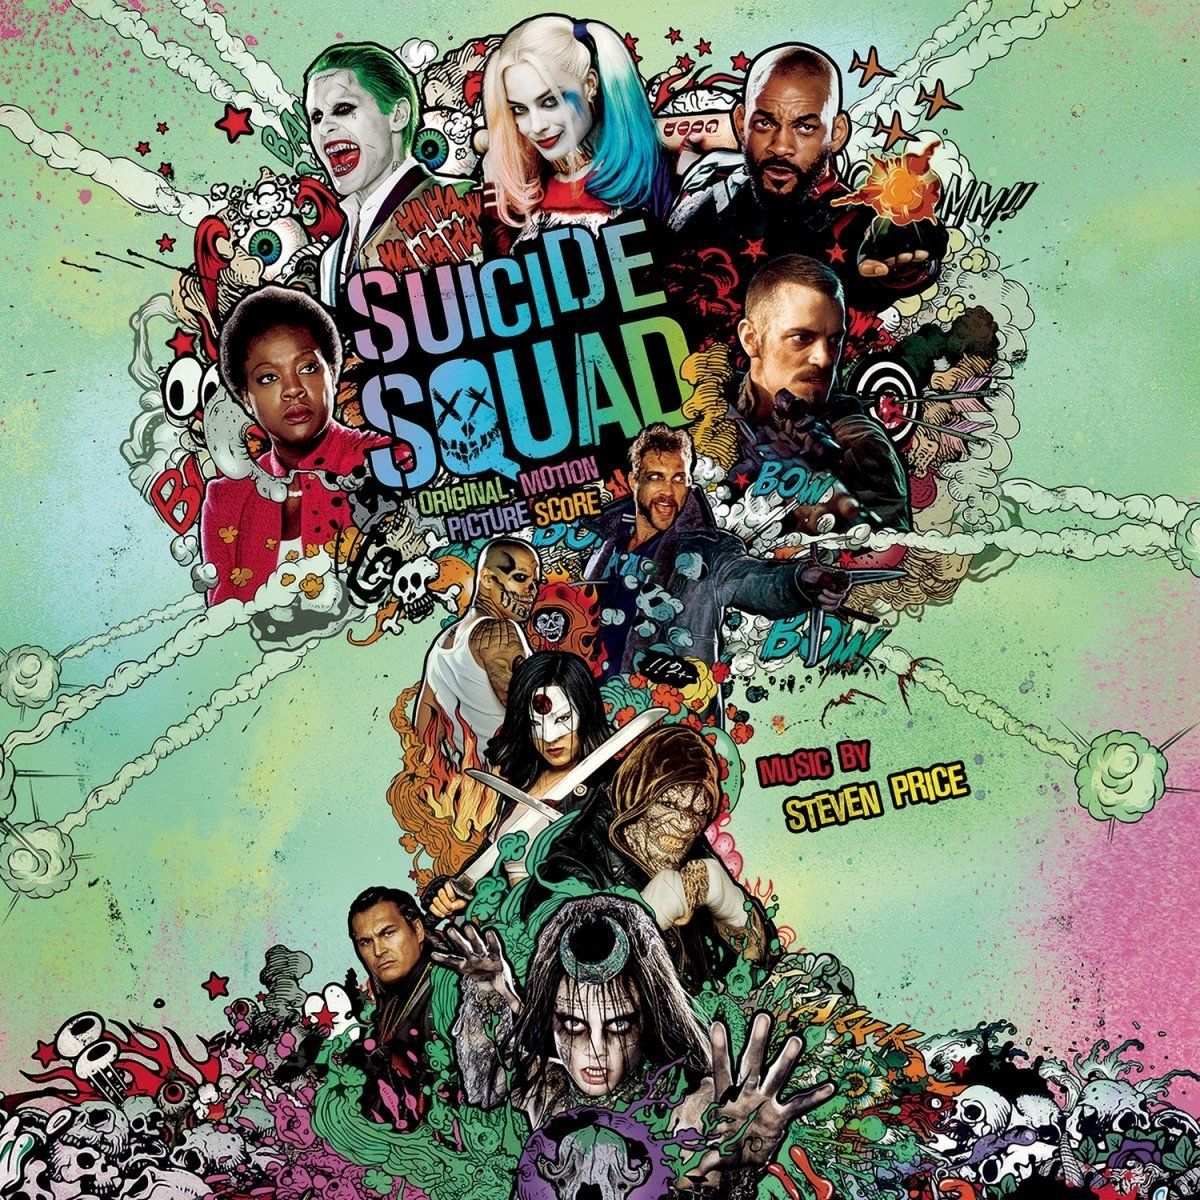 Escuche una pista completa de la partitura de 'Suicide Squad'